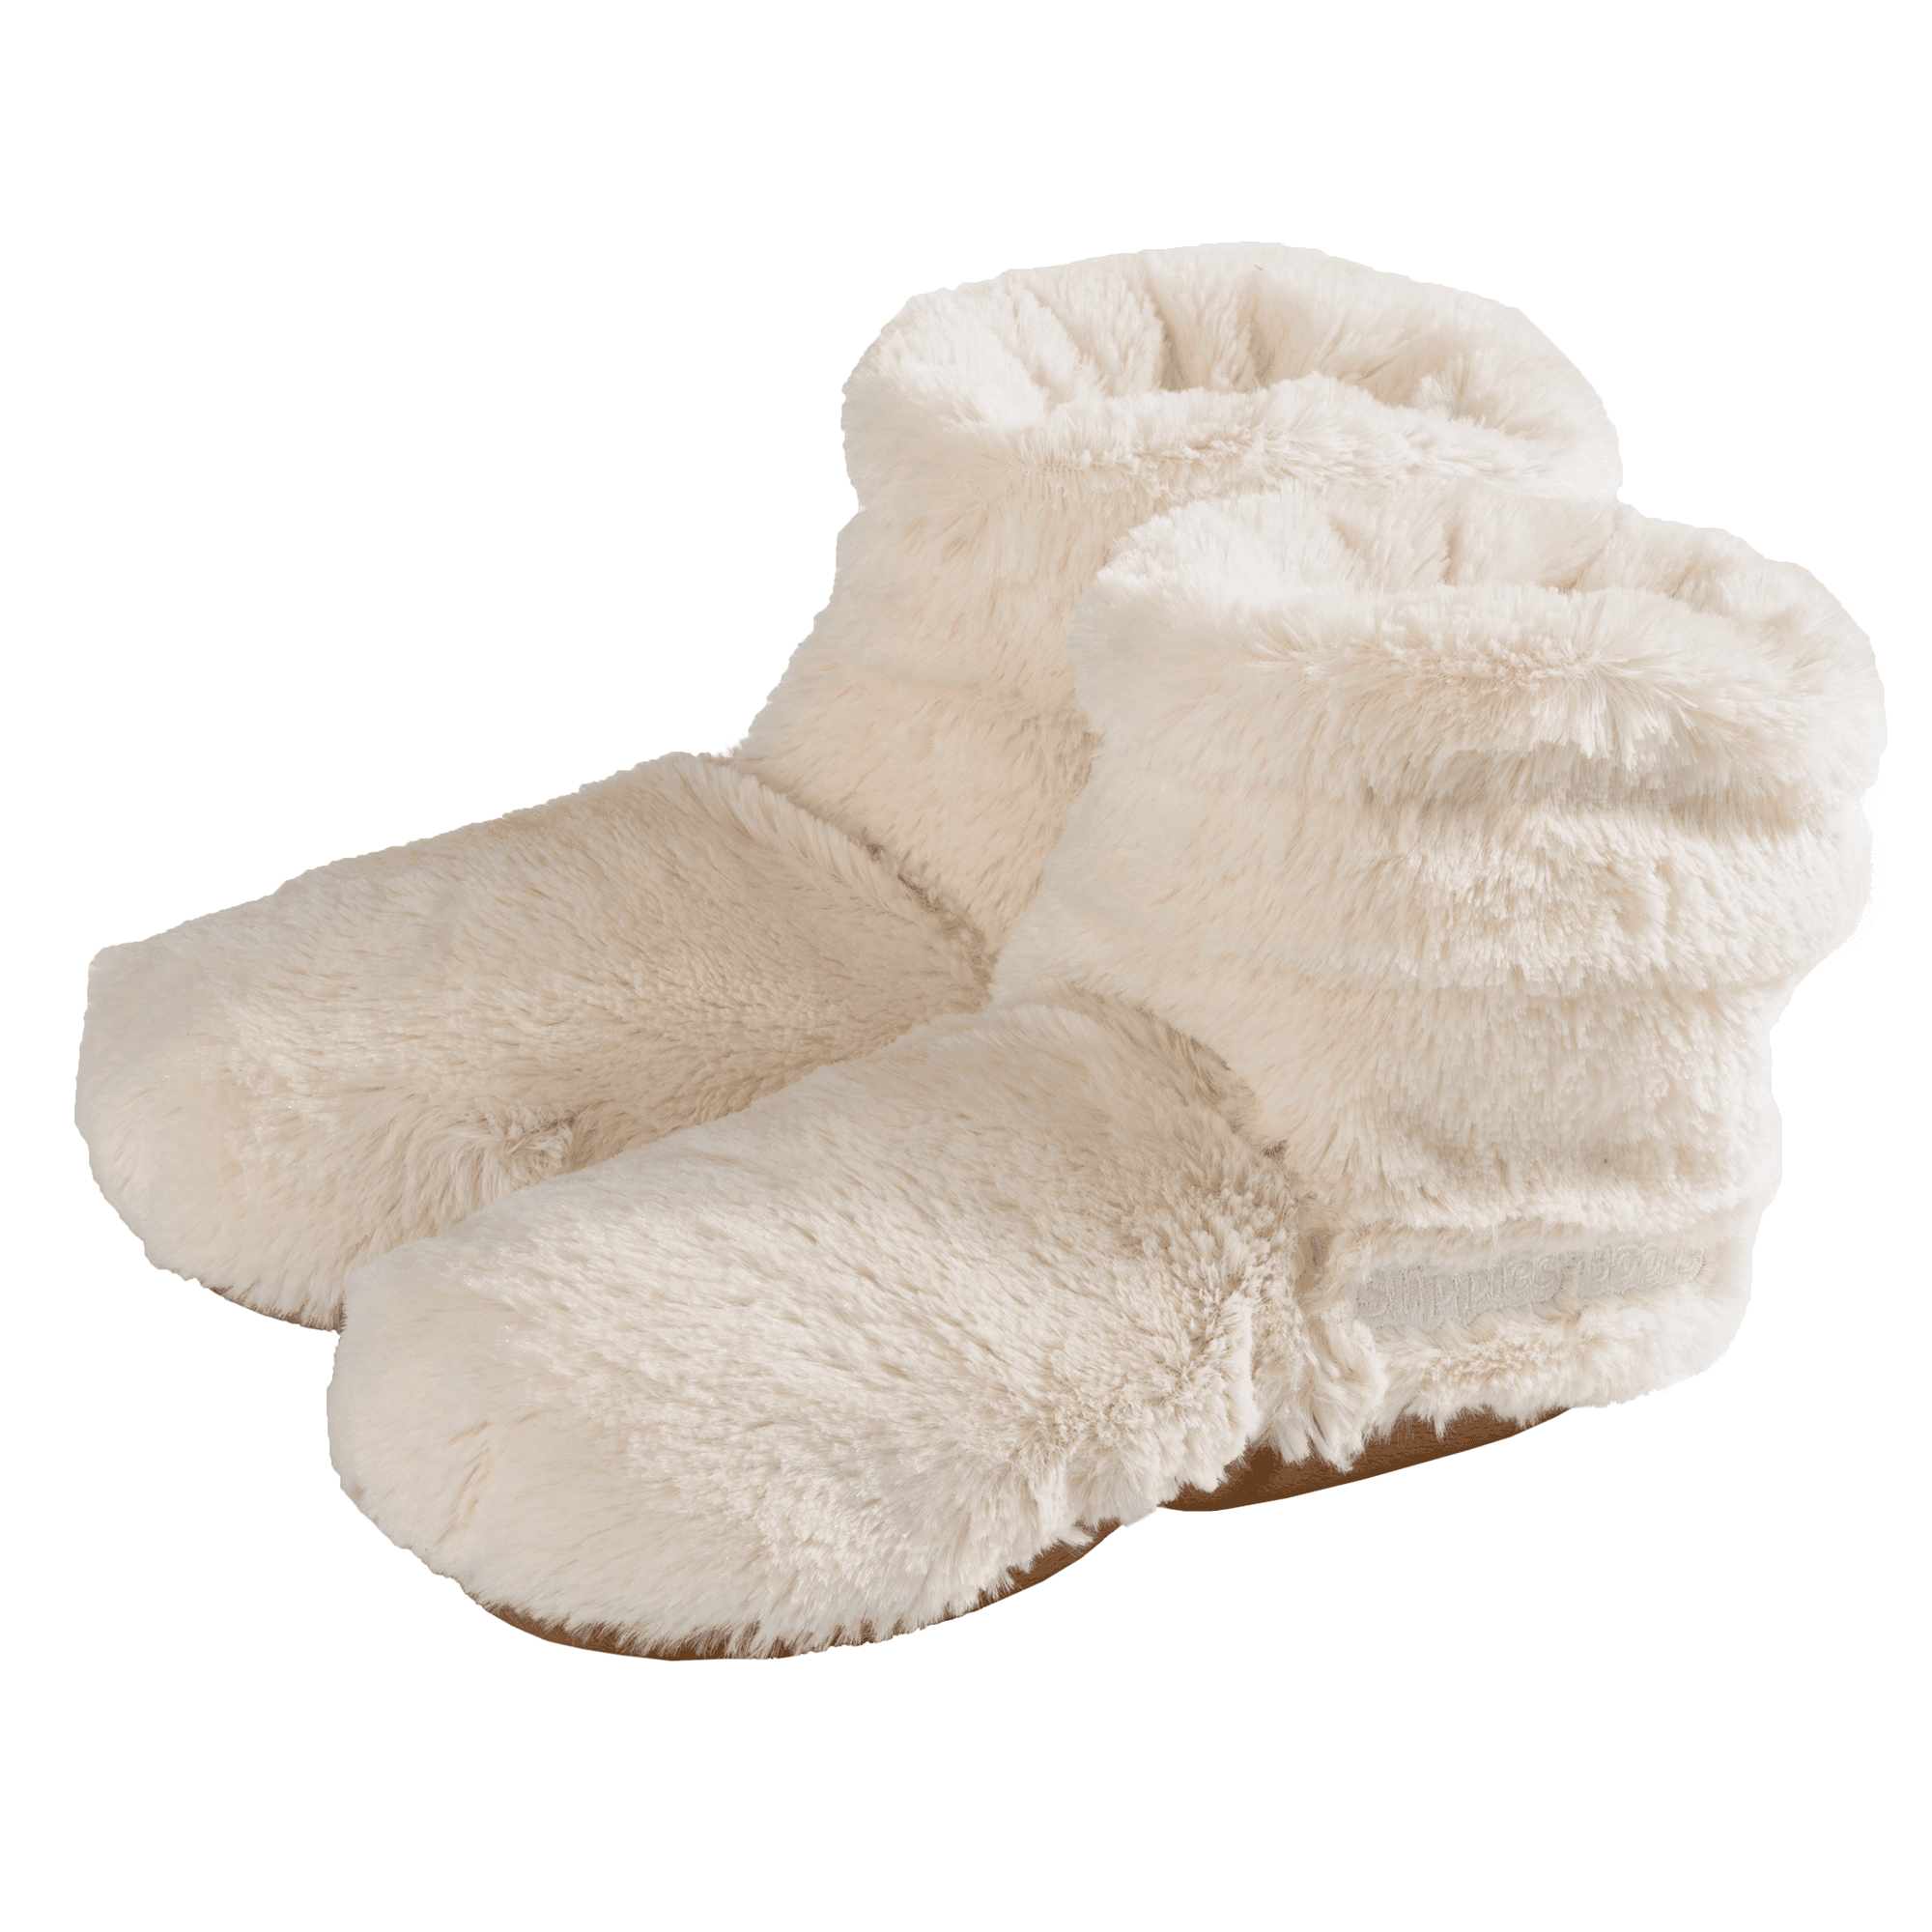 Warmies® Slippies® Boots Deluxe Gr. 37-42 warmies Beige 2000583007500 1